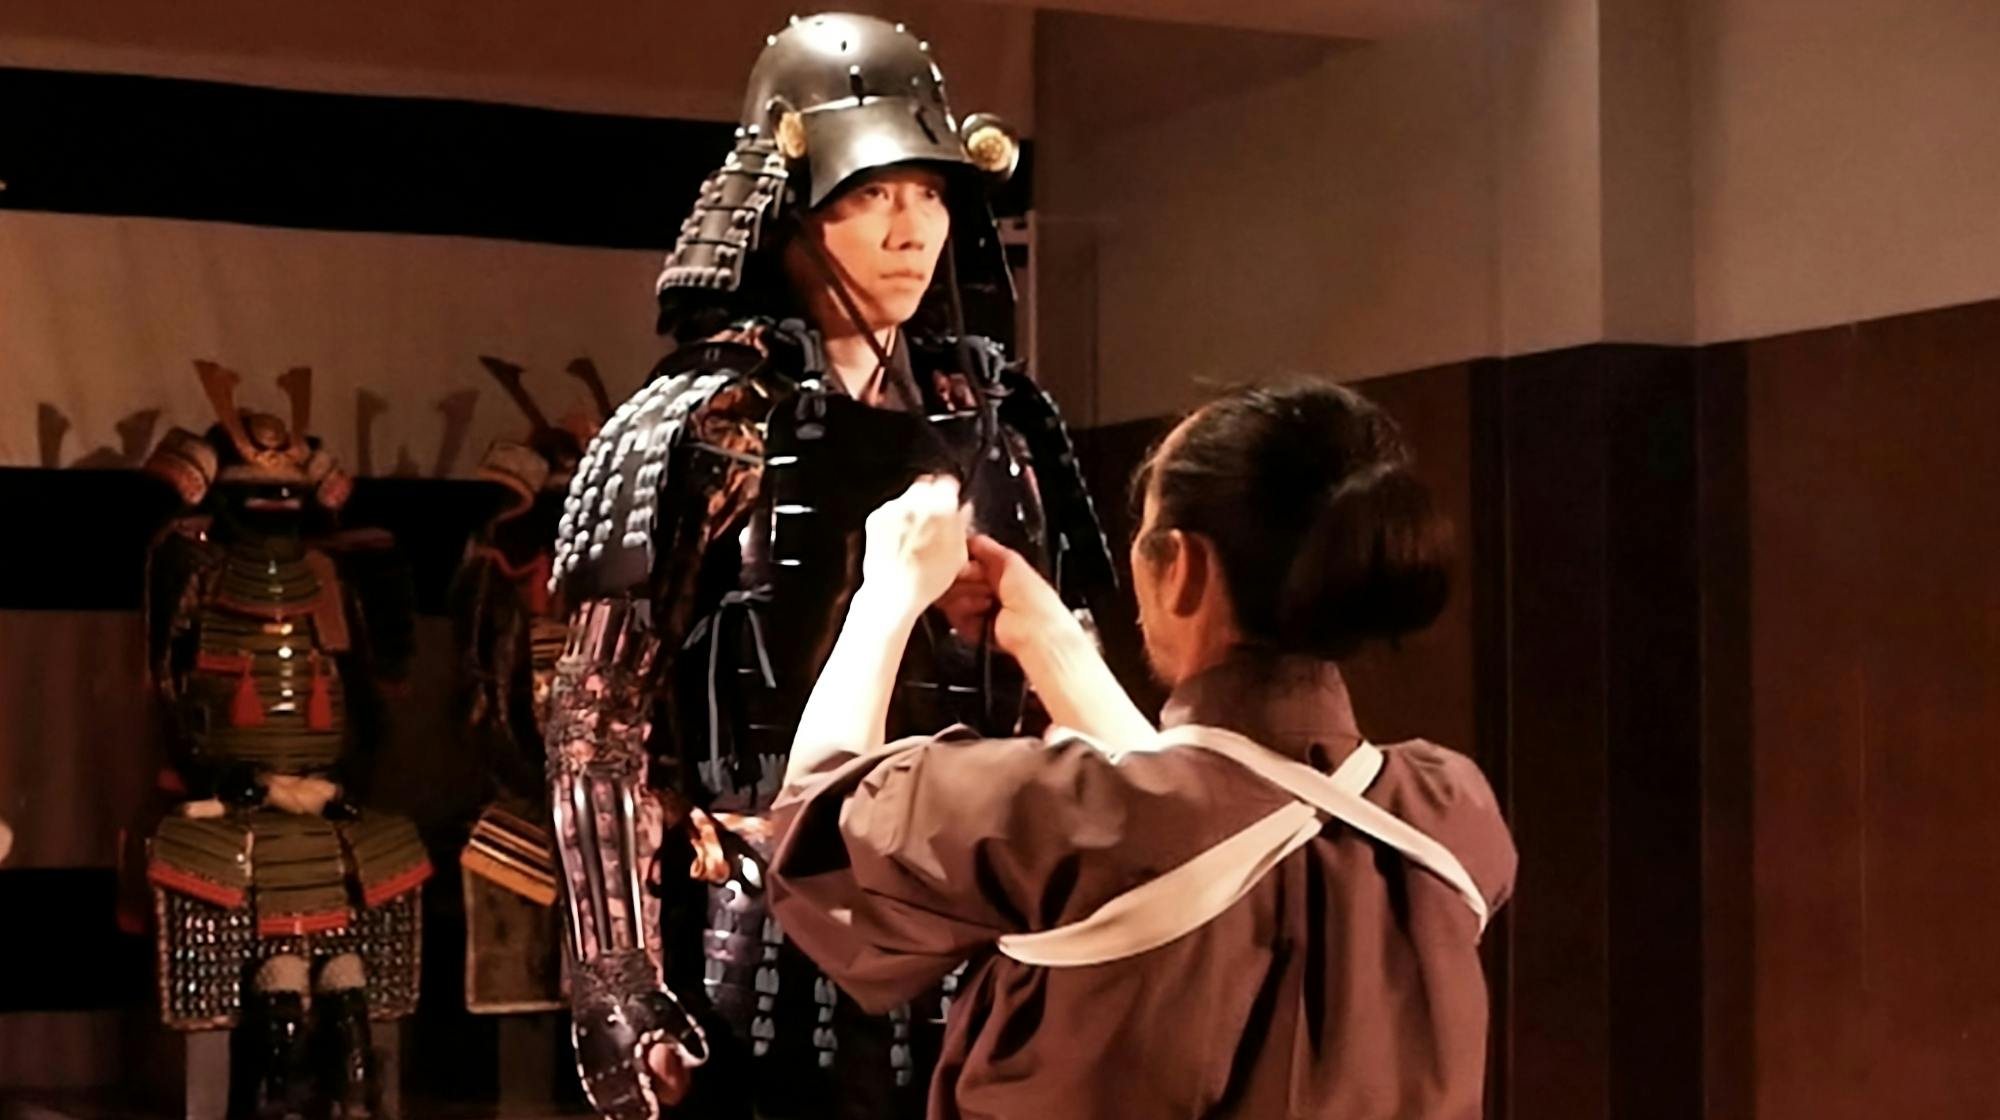 Armor experience at Samurai Theater in Tokyo